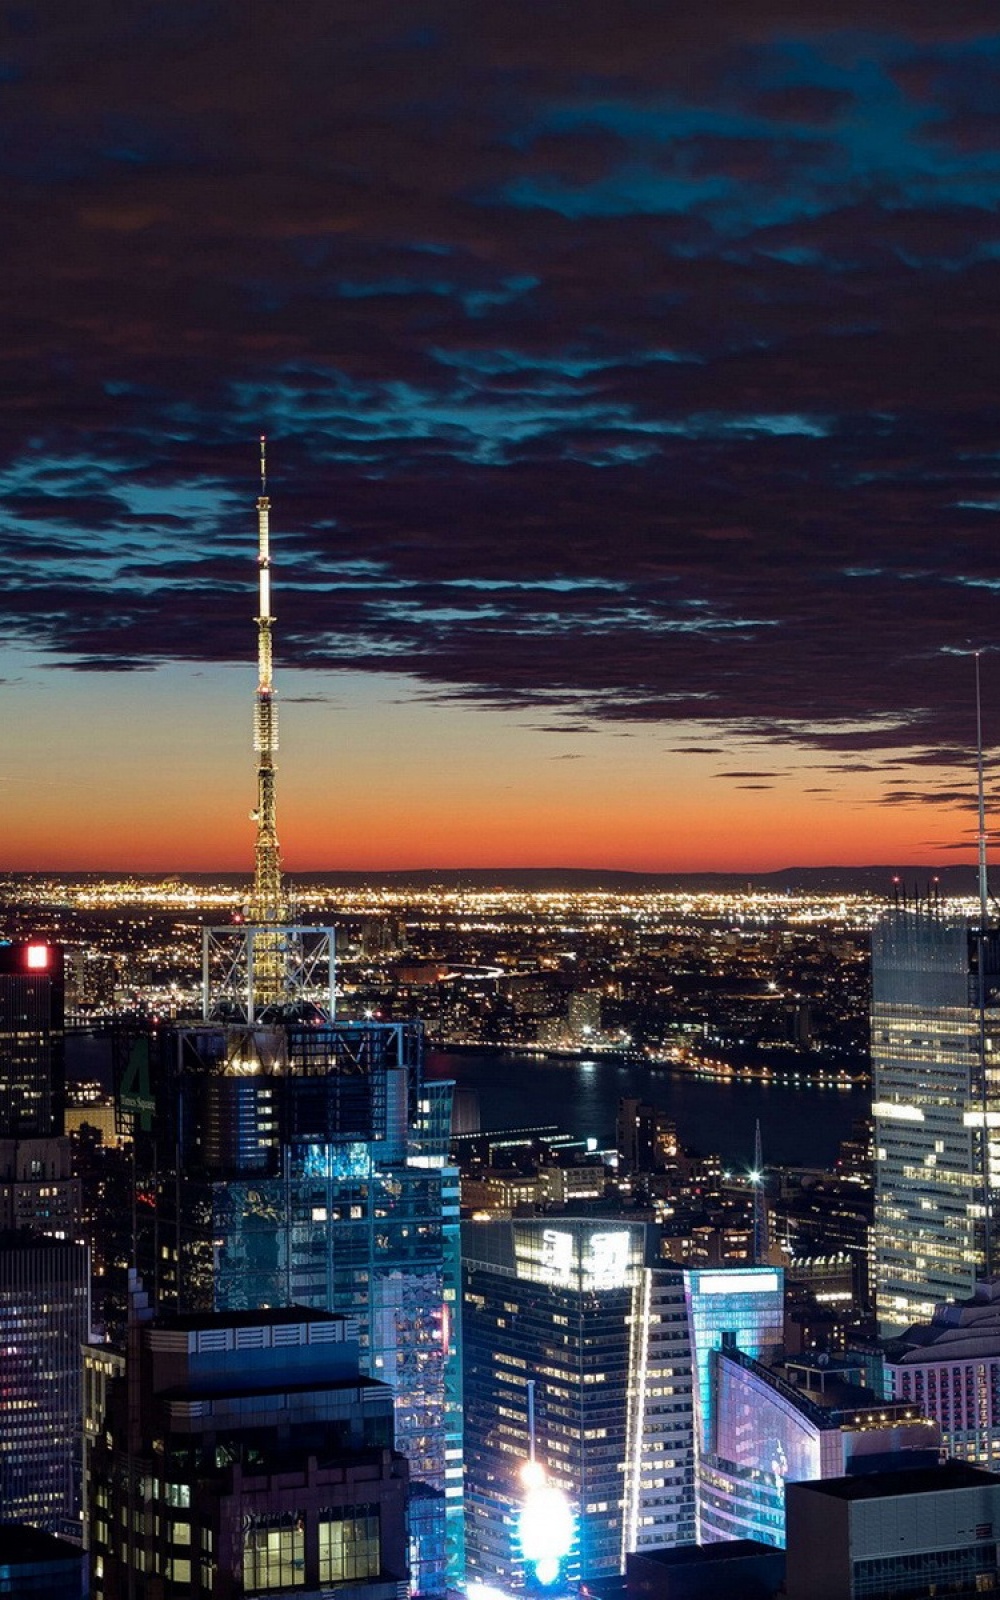 Share Dark Night City Skyline iPhone Plus HD Wallpaper On